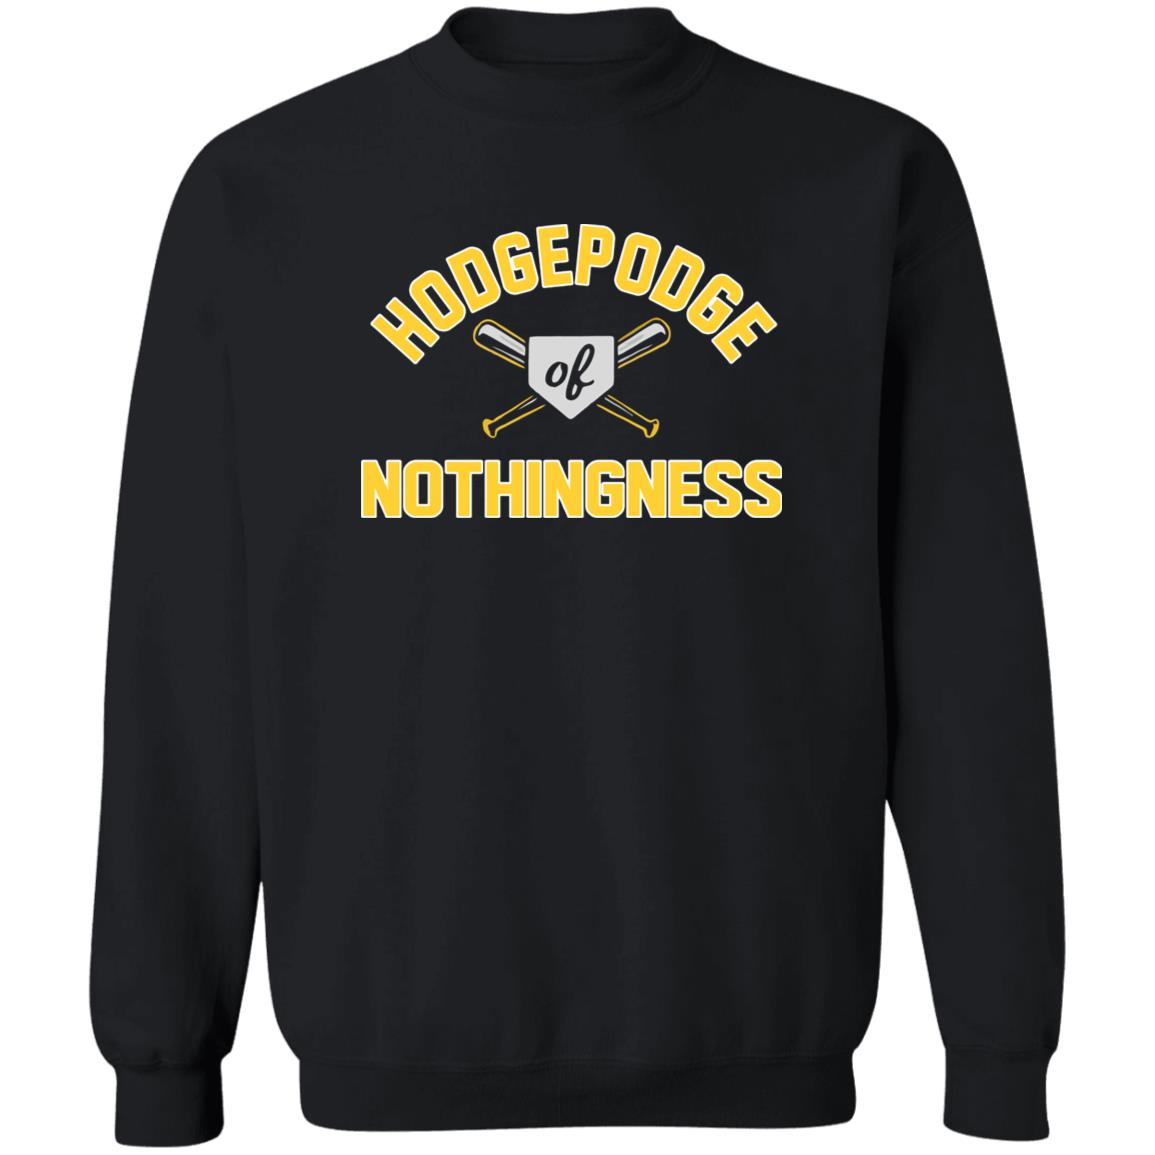 Hodgepodge Of Nothingness Shirt 2